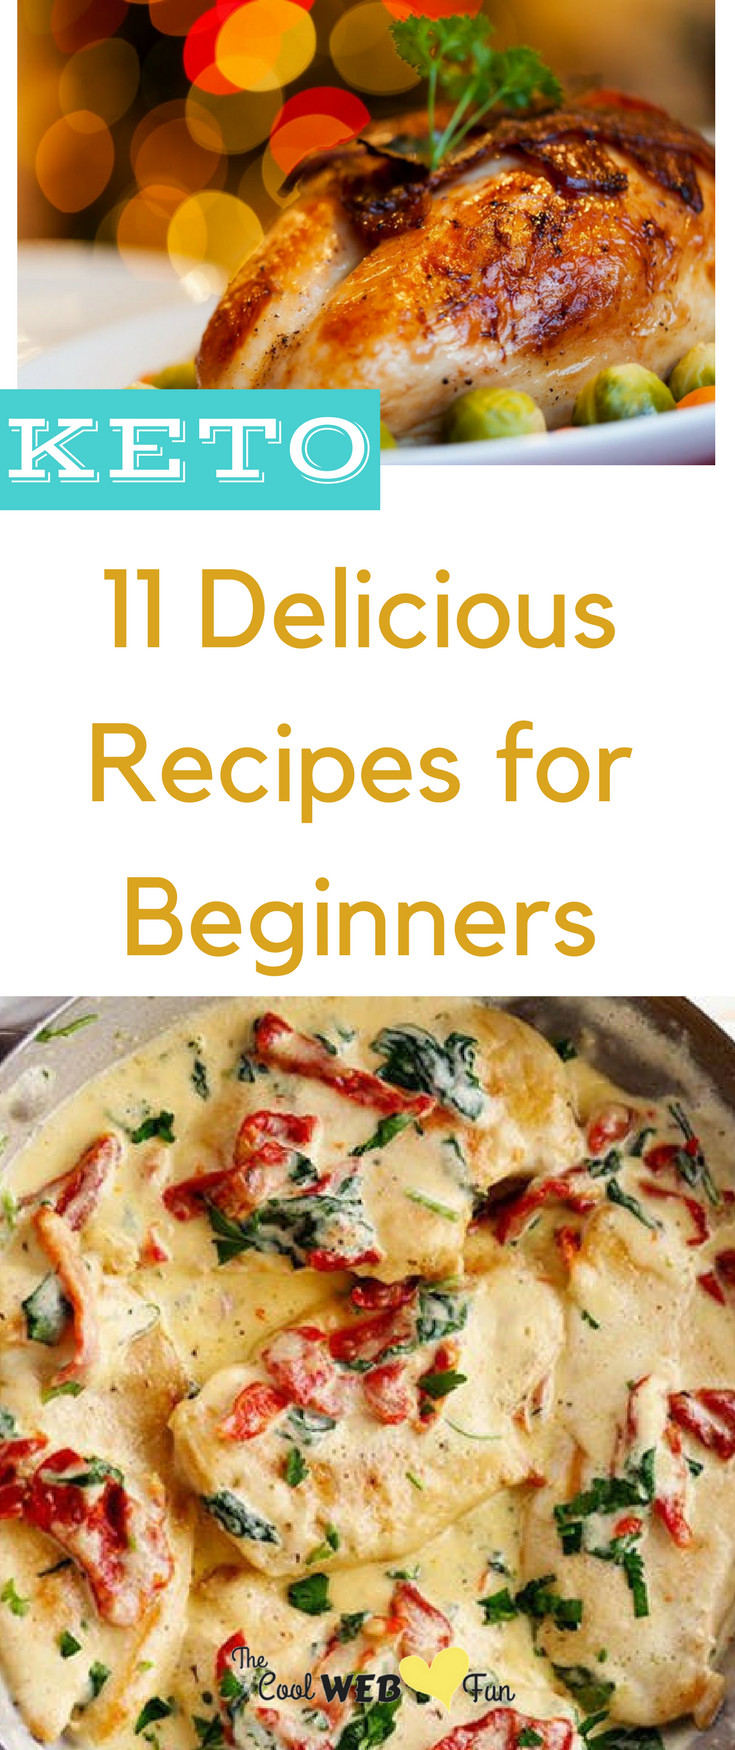 Keto Diet Recipes For Beginners
 11 Keto Recipes for Beginners Fitness Bash